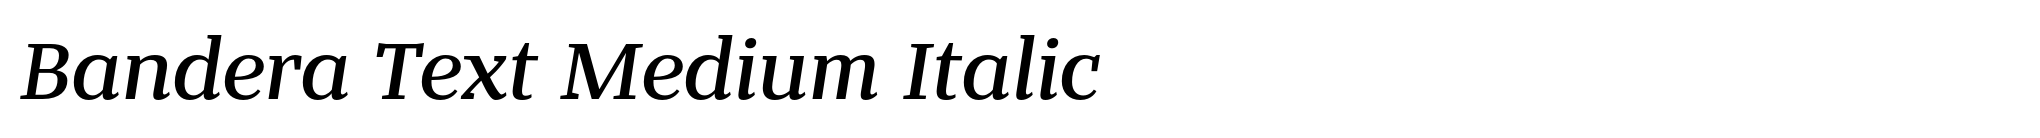 Bandera Text Medium Italic image